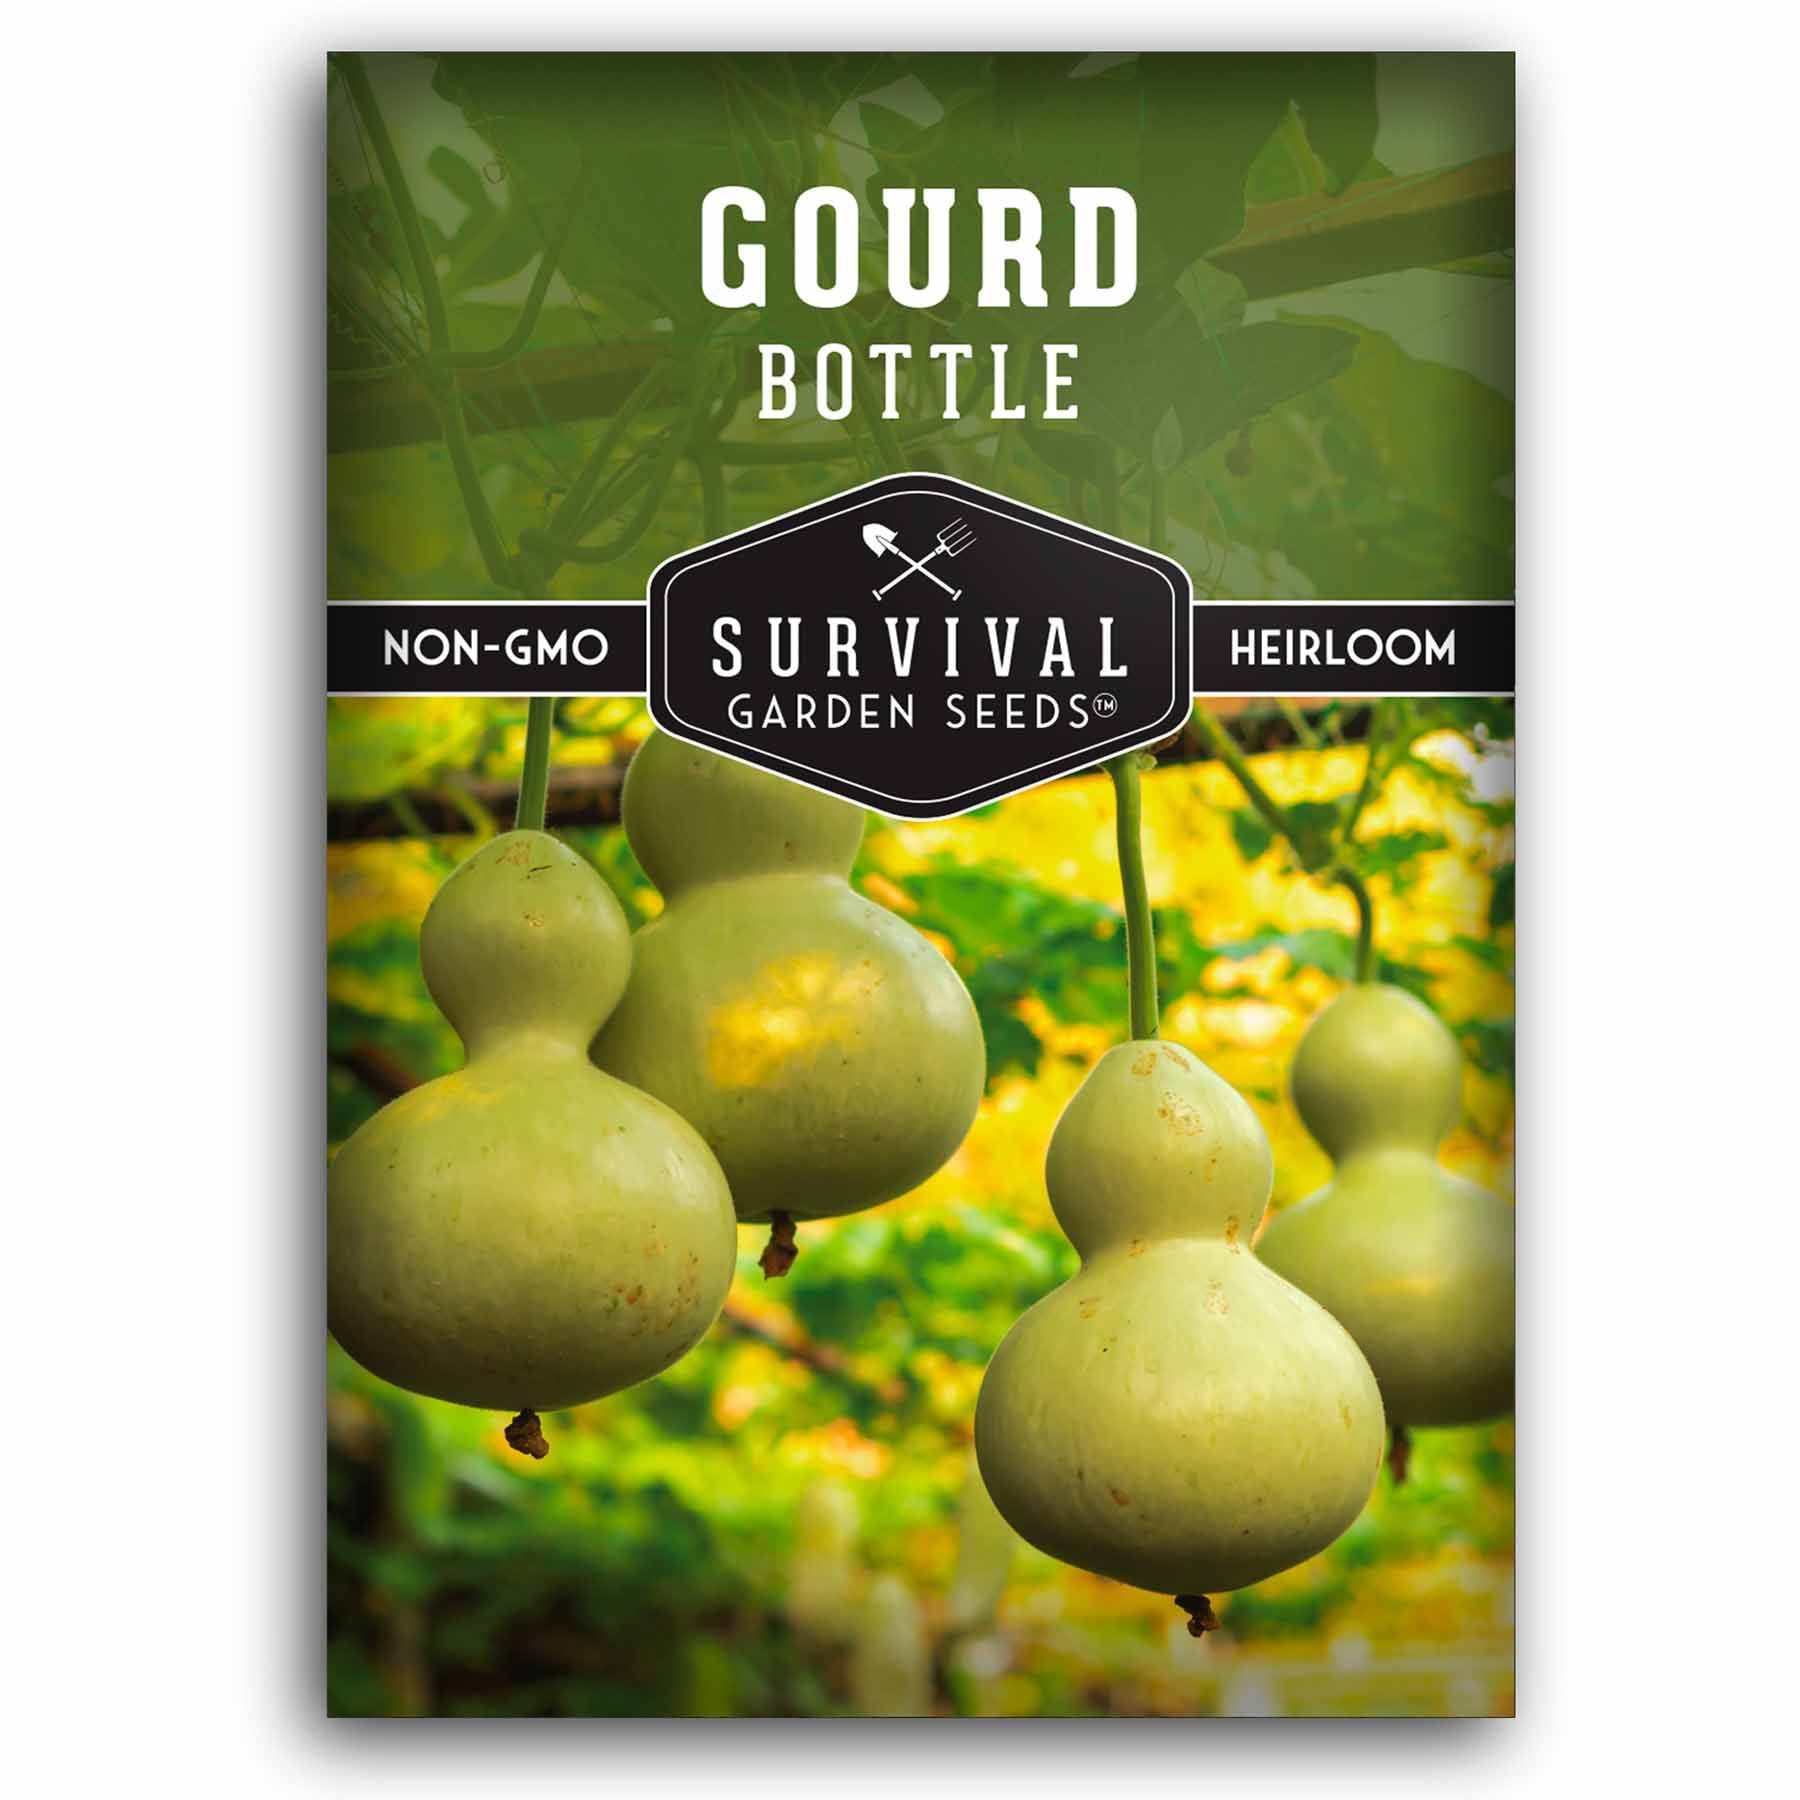 1 packet of Bottle Gourd seeds